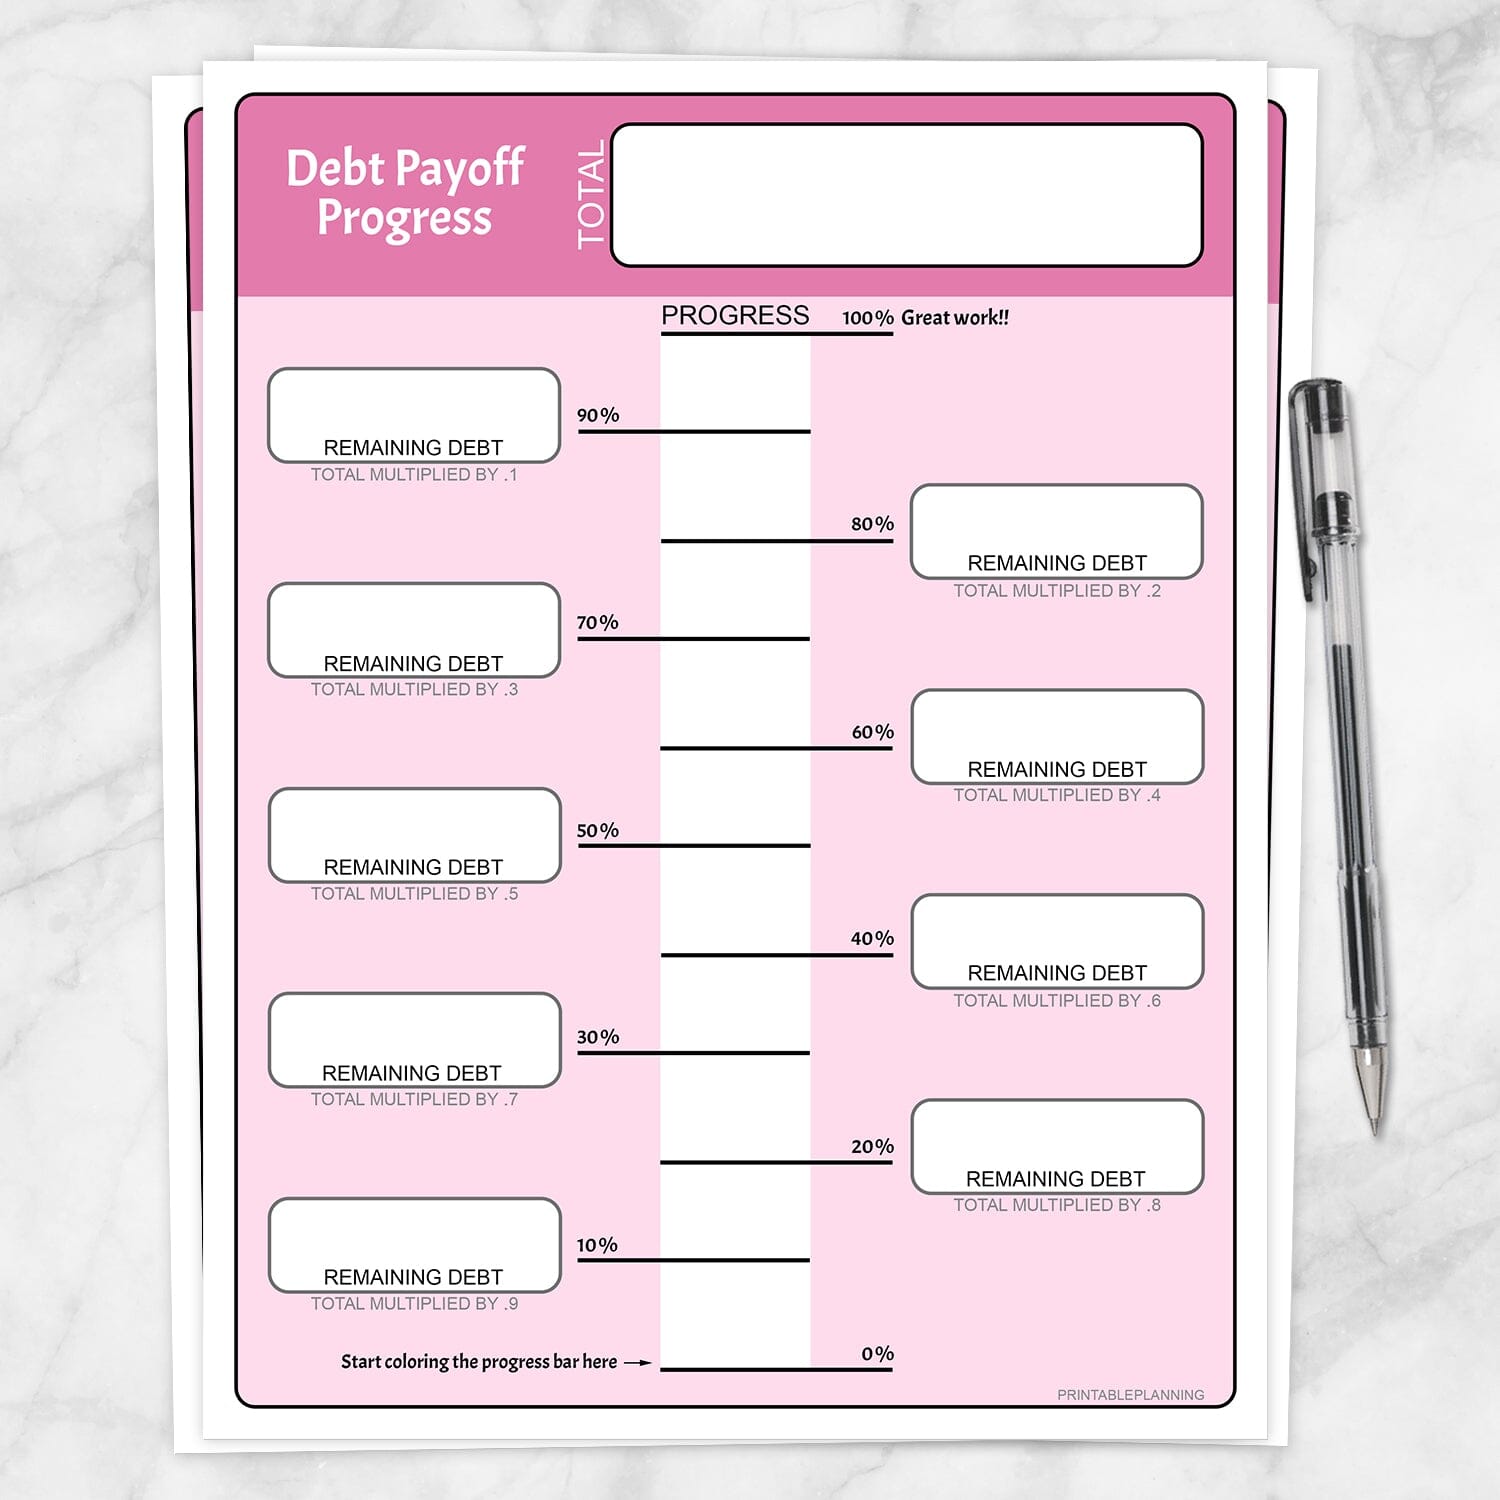 Printable Remaining Debt Payoff Progress Bar Worksheets in Pink at Printable Planning.